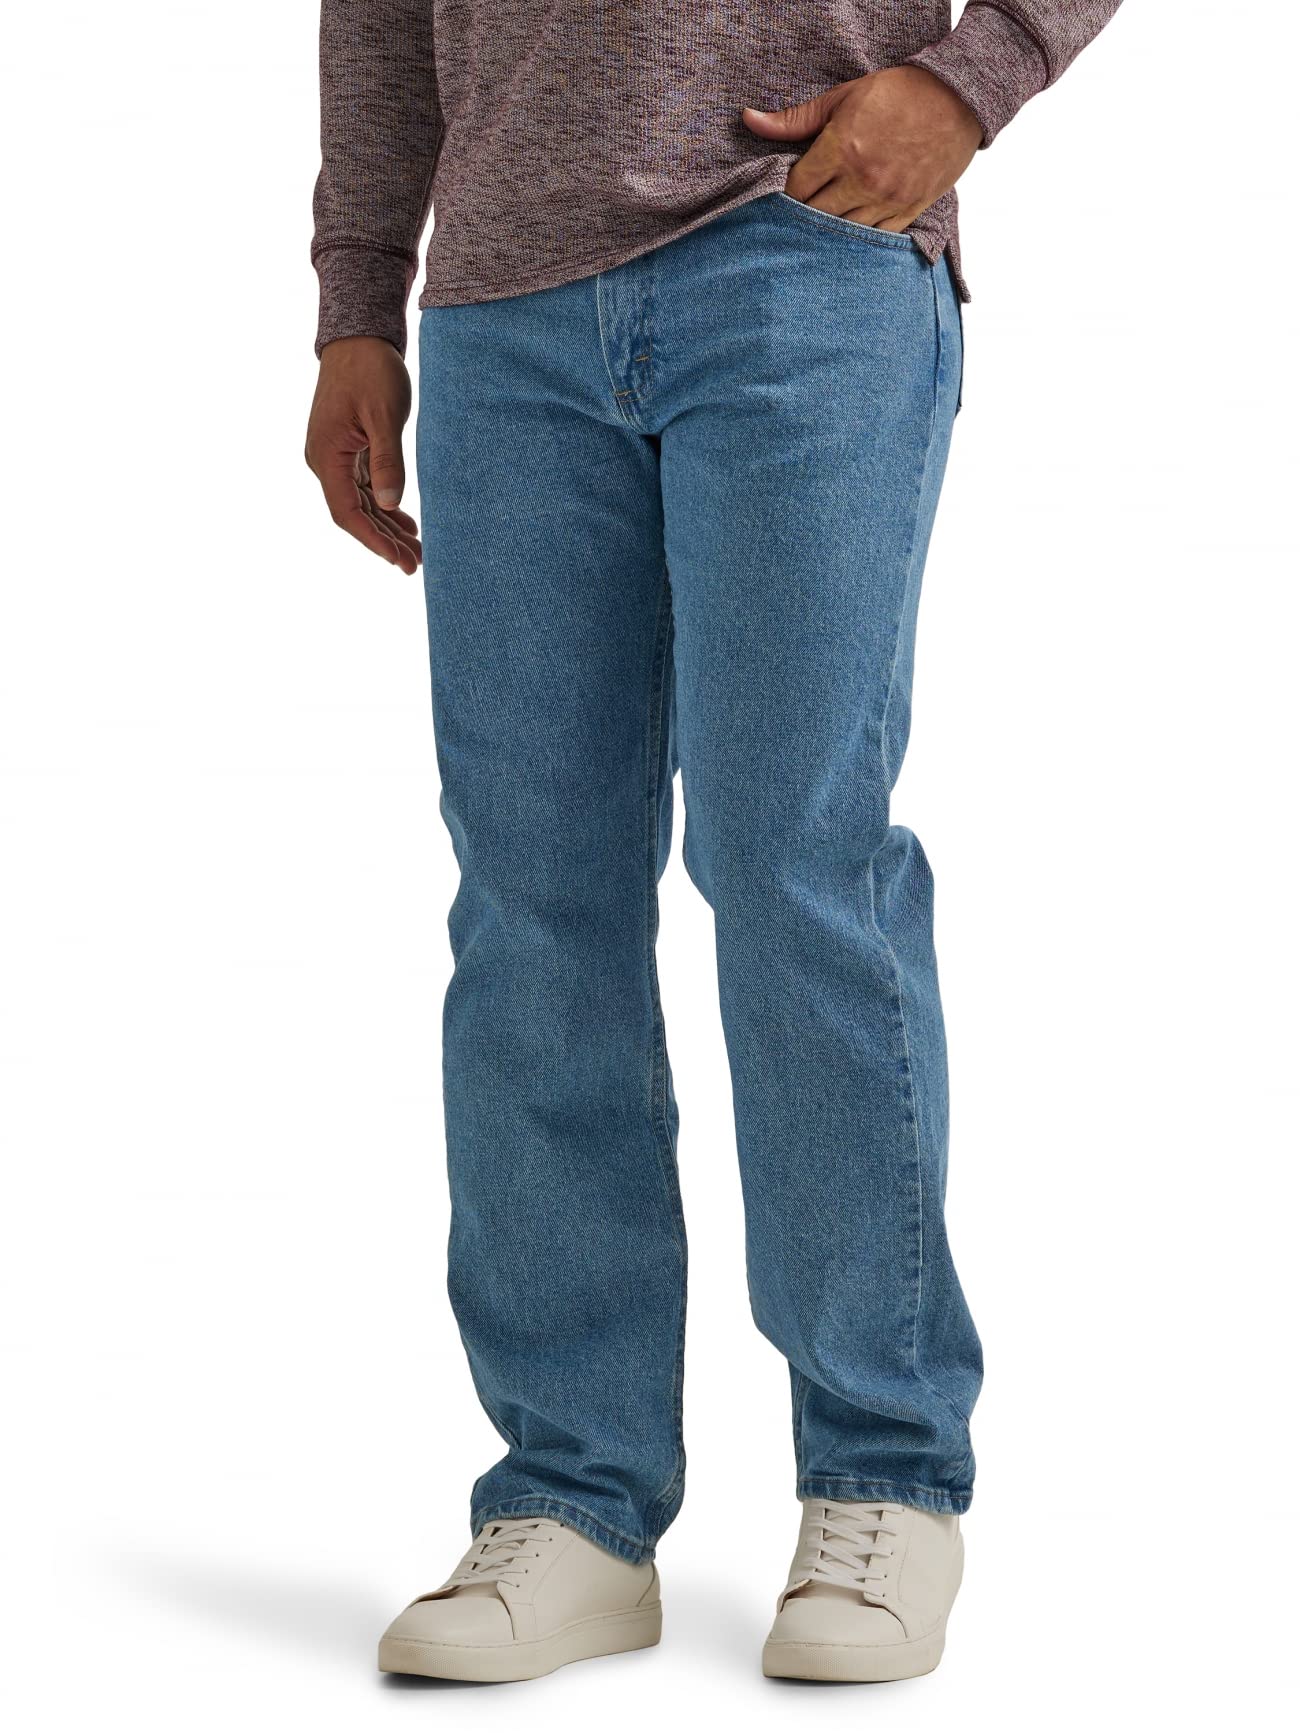 Wrangler Authentics Men's Classic 5-Pocket Regular Fit Jean, Light Stonewash Flex, 40W X 28L